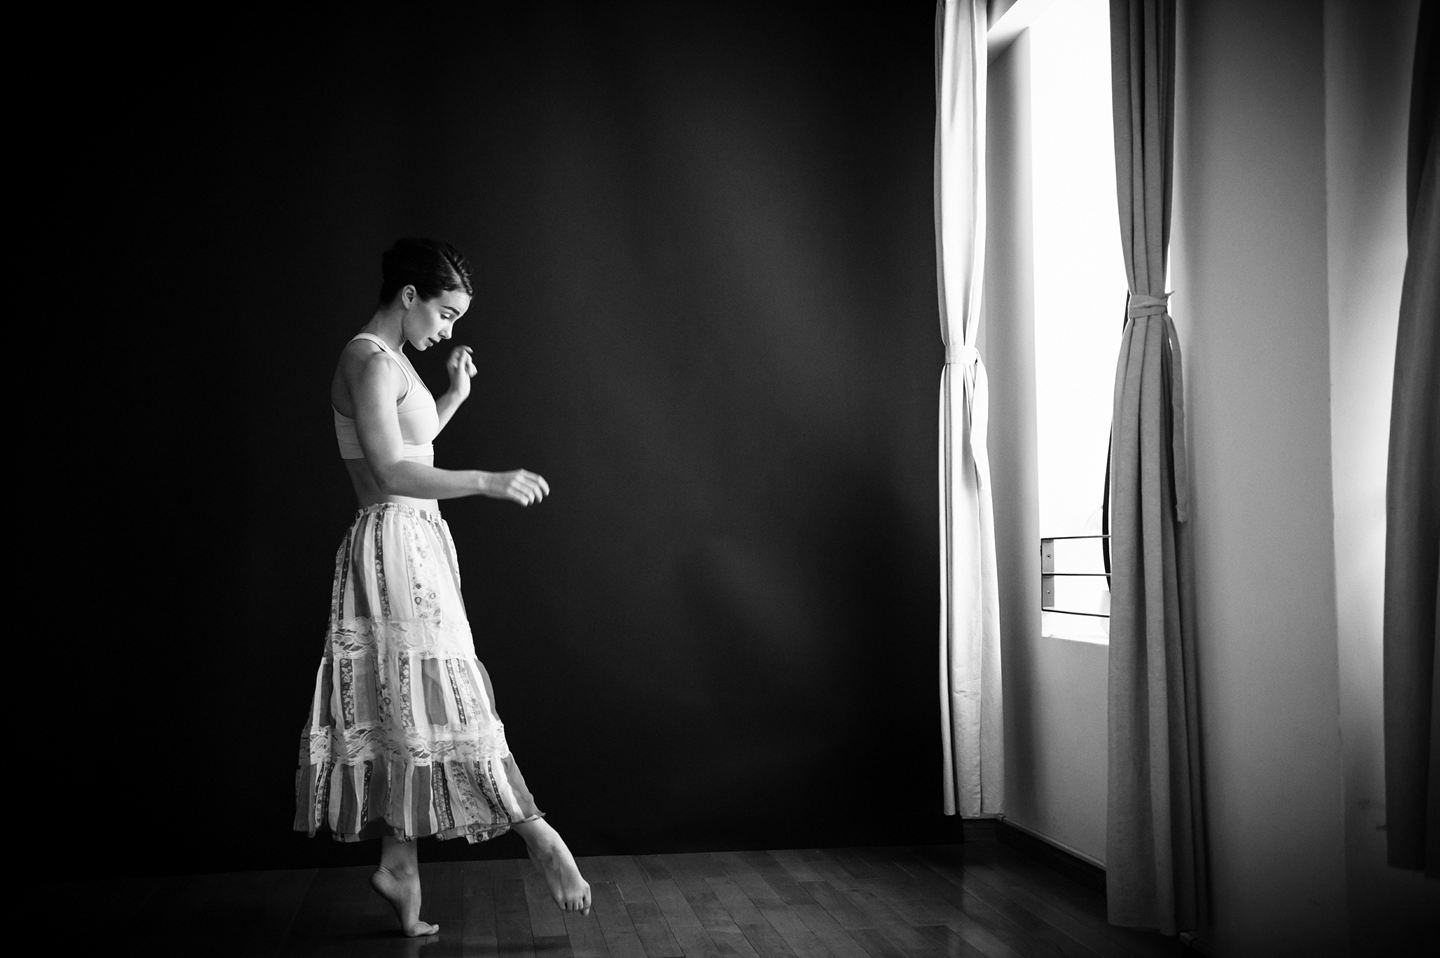 Los Angeles Dance Portrait Photo - Olga Sokolova - by Tommy Xing Photography 21.JPG